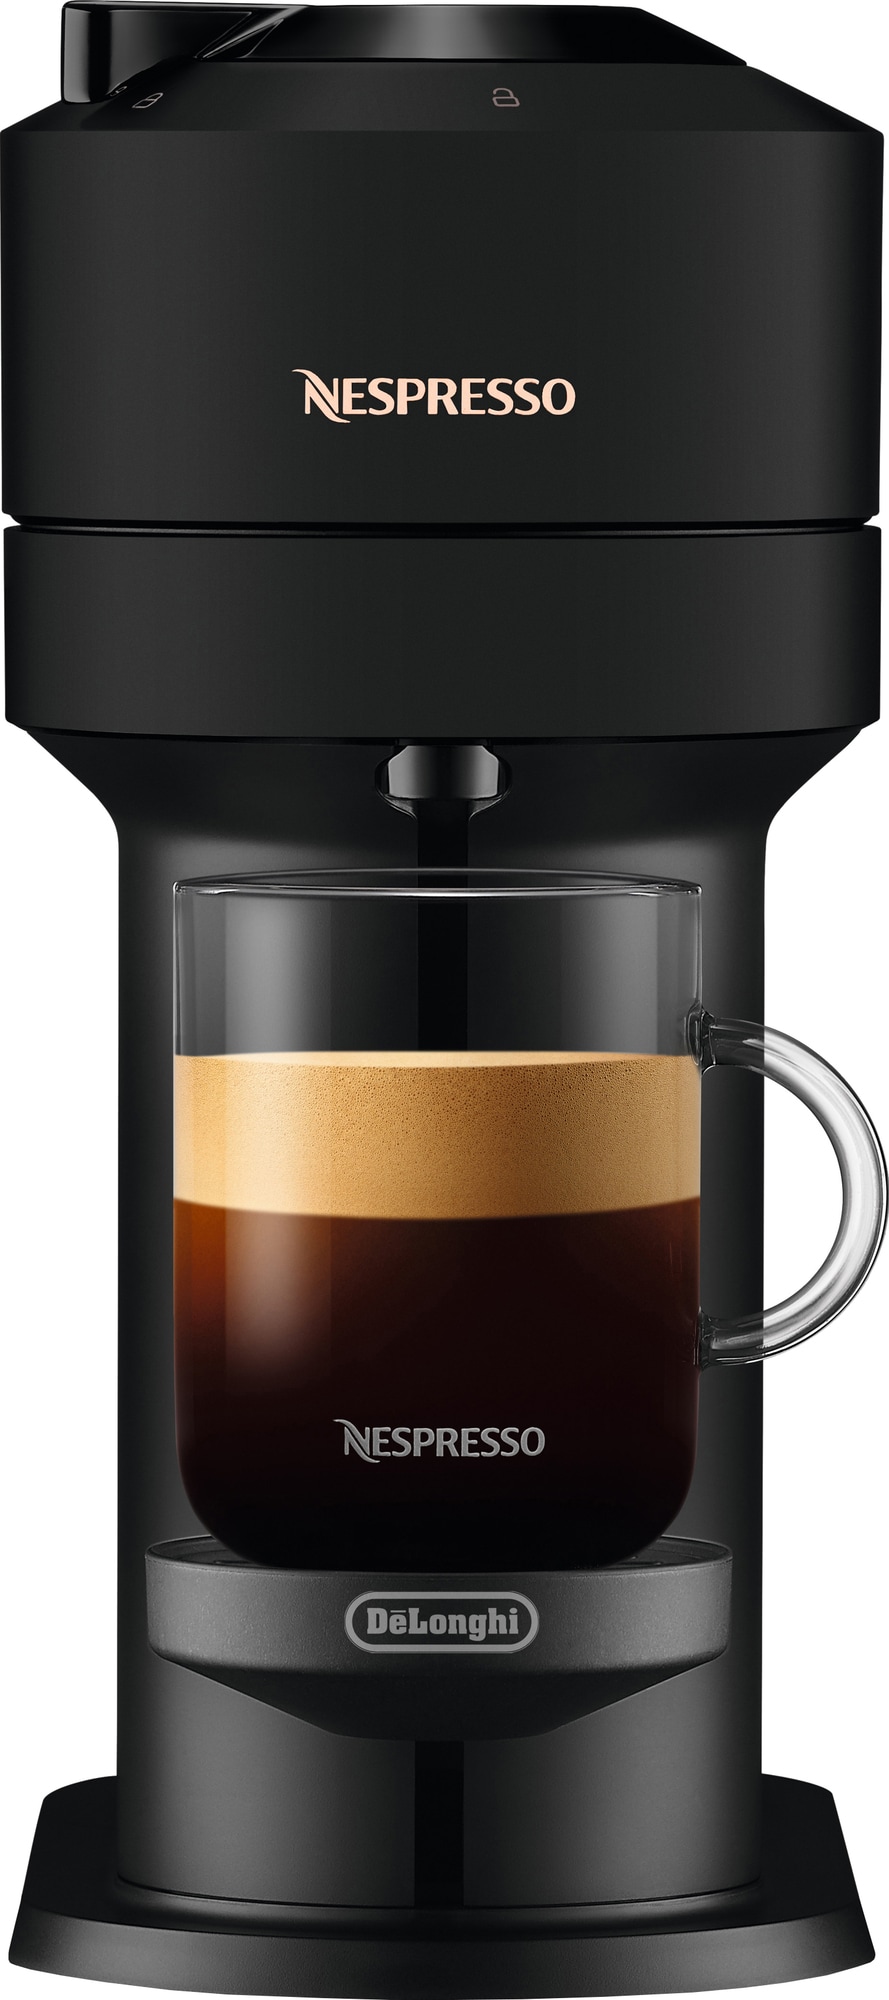 NESPRESSO® Vertuo Next kaffemaskin av DeLonghi, Matt Svart - Elgiganten